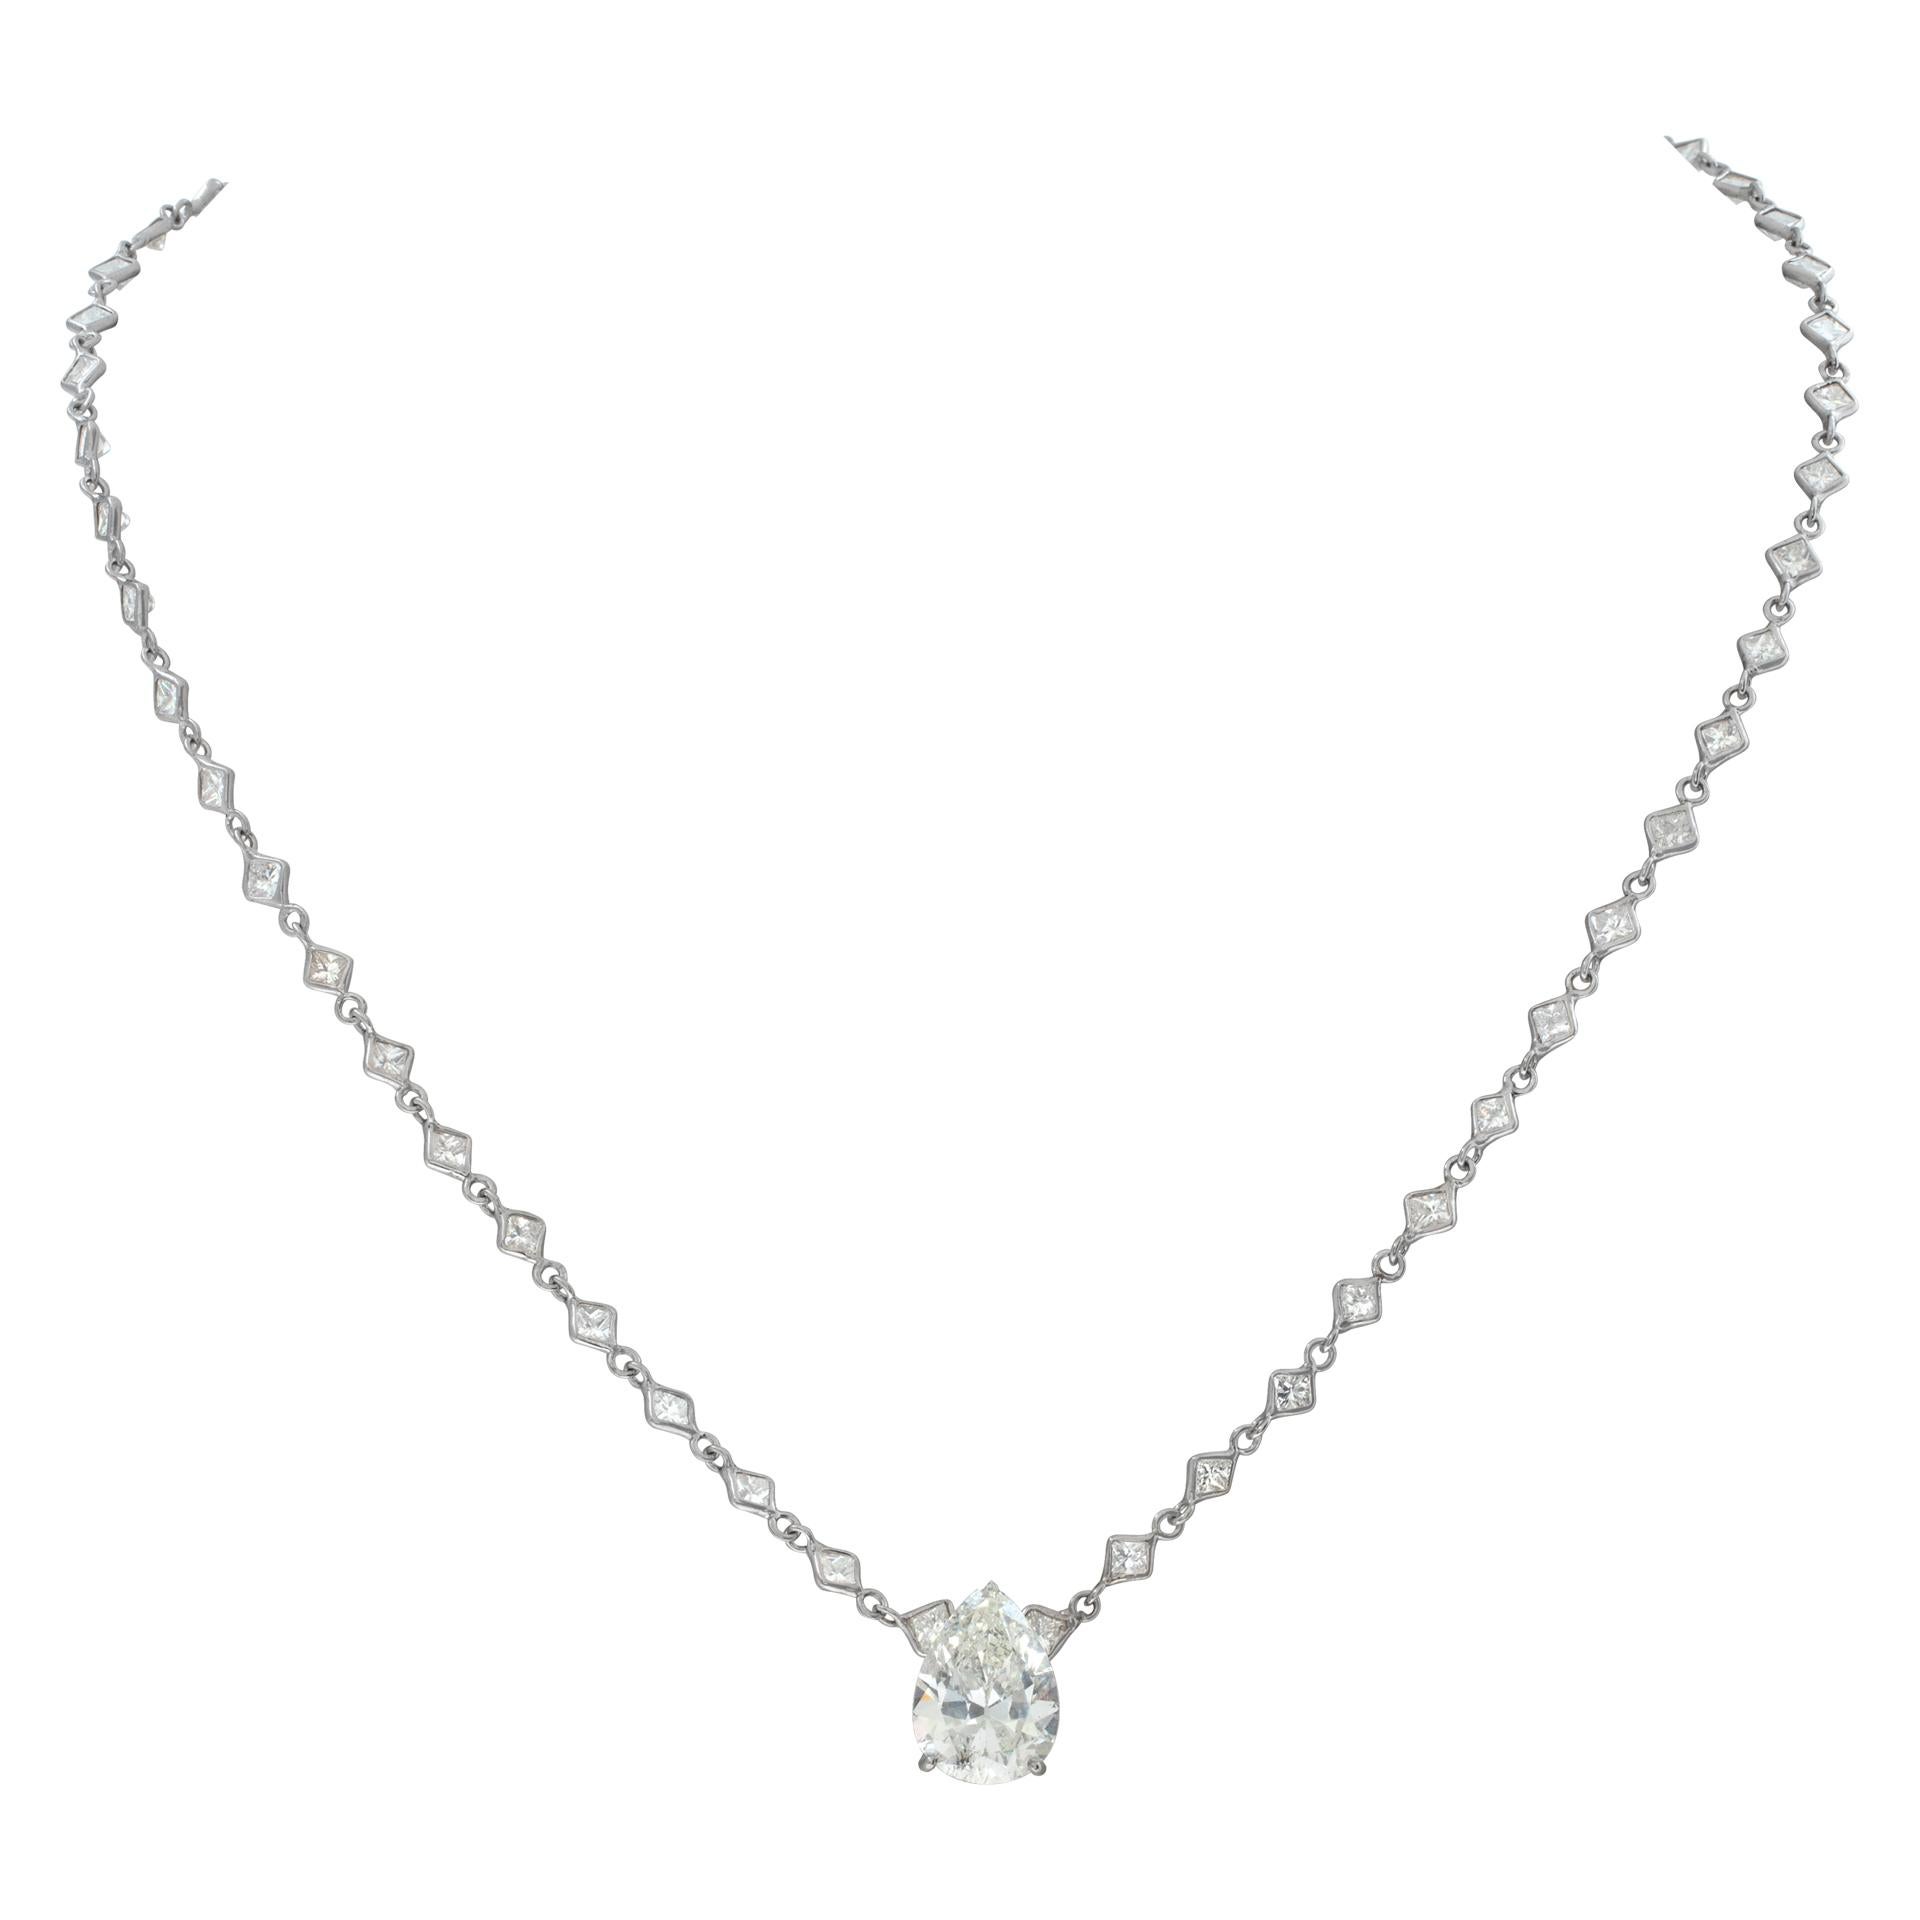 Diamond pendant necklace with GIA certified pear shaped princess cut diamonds